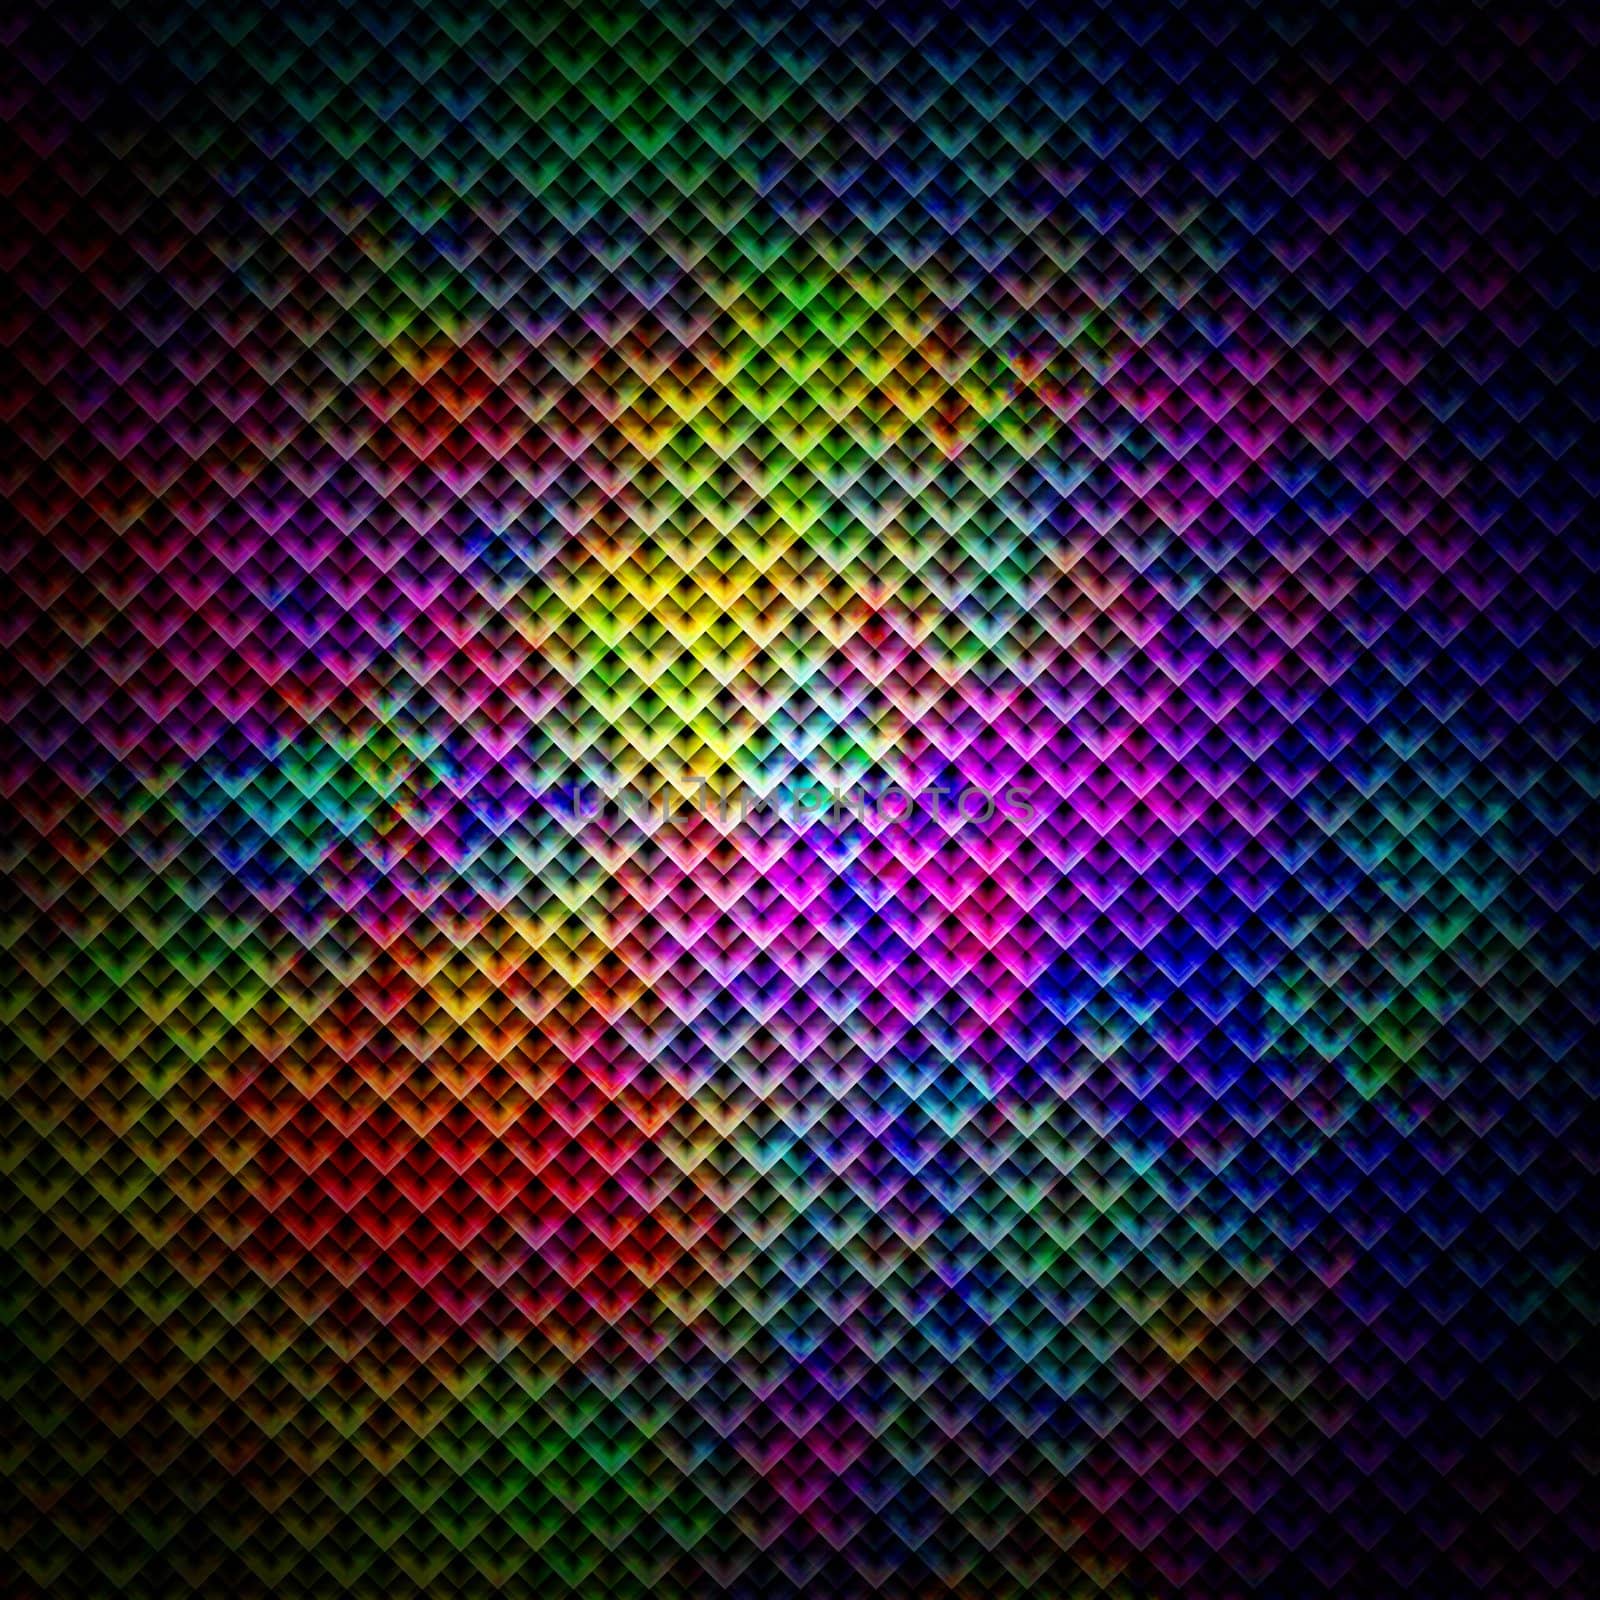 Abstract kaleidoscope backgroun wallpaper or backdrop